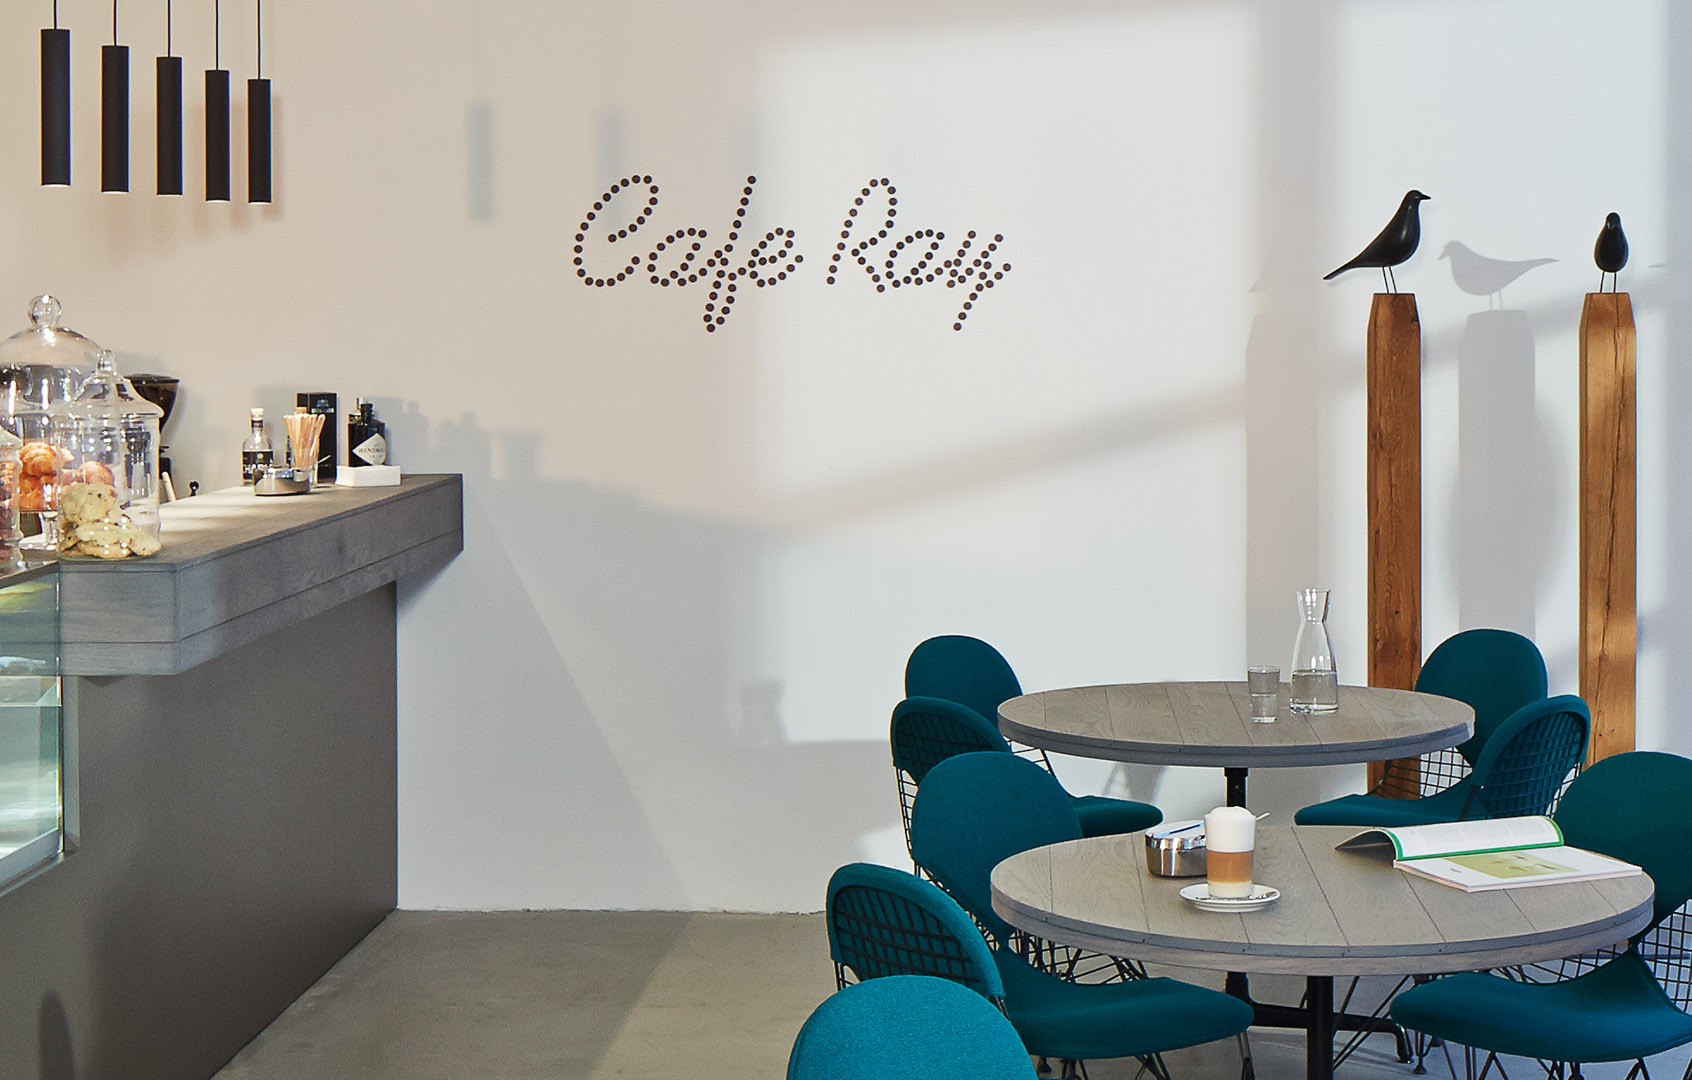 Places / Café Ray, Hamburg